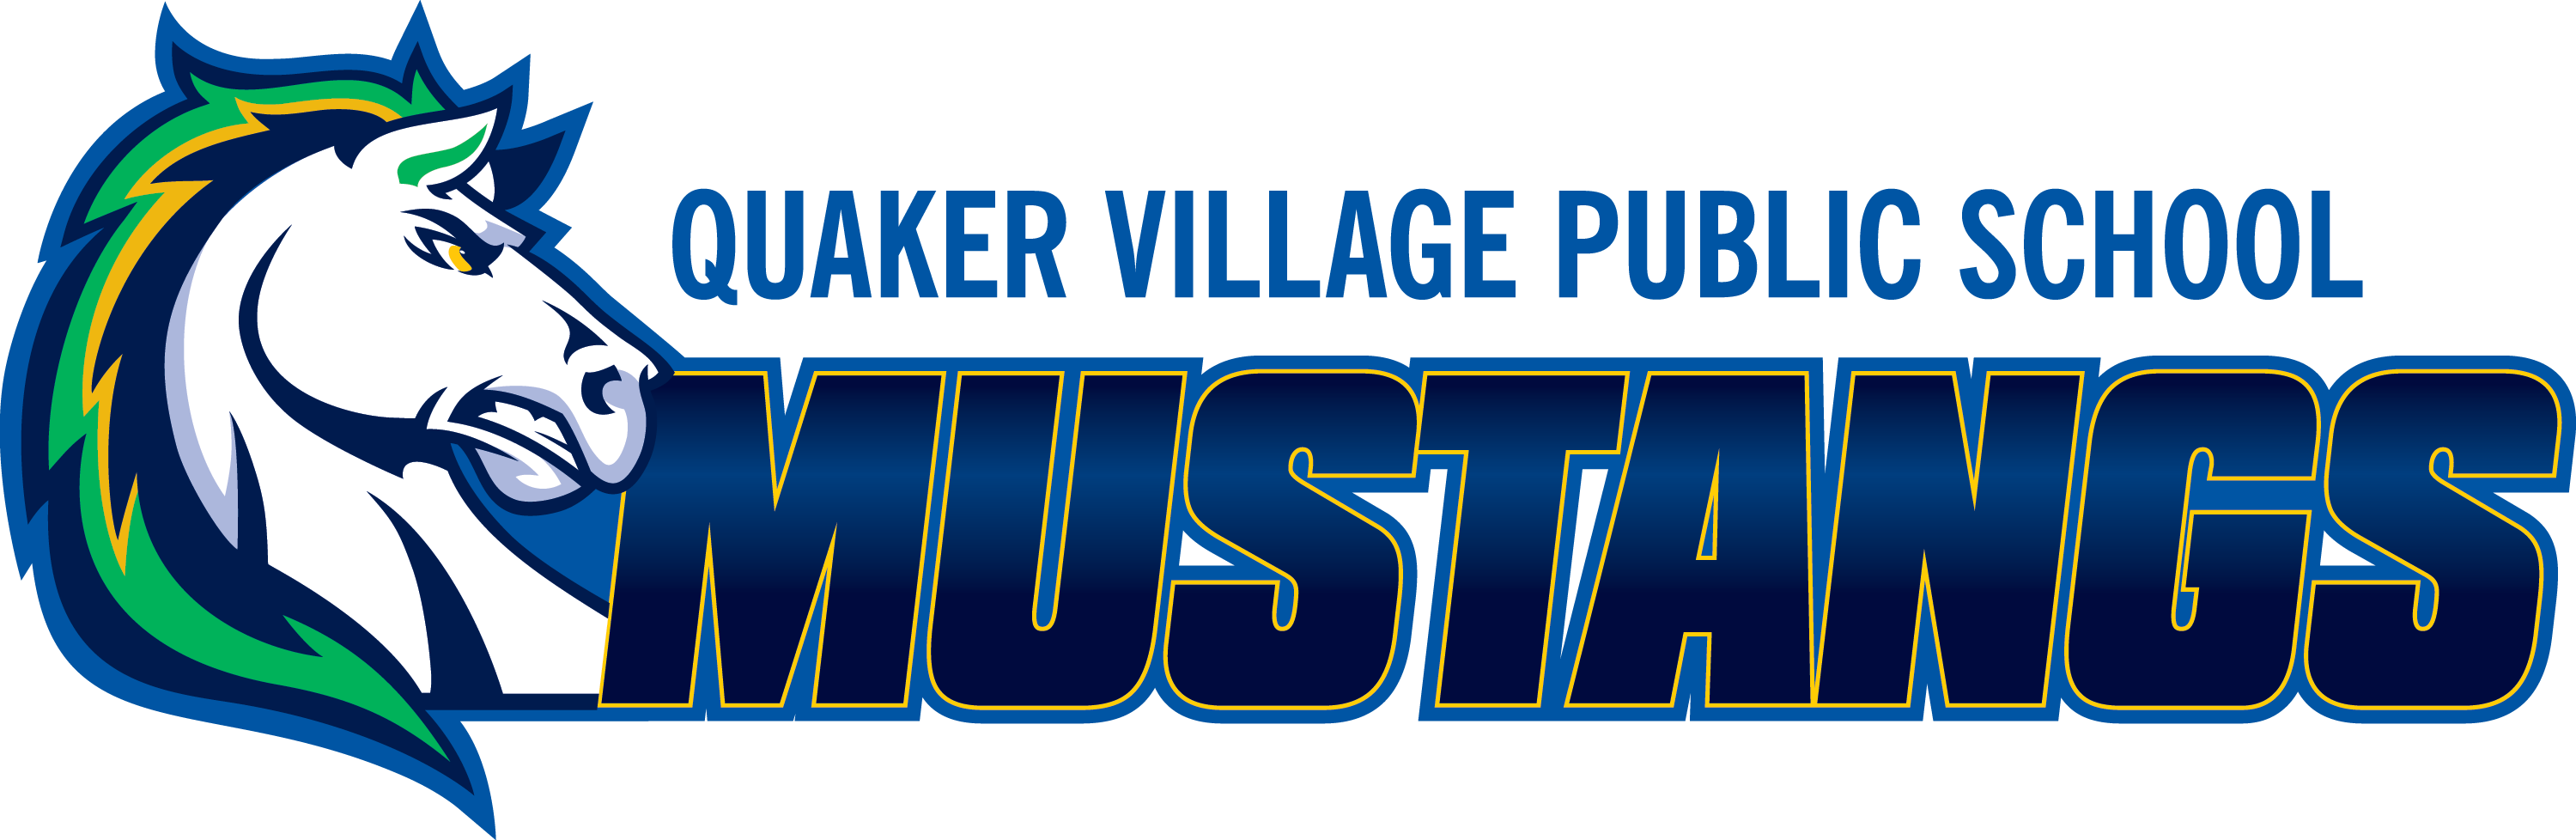 Quaker Village Public School Logo